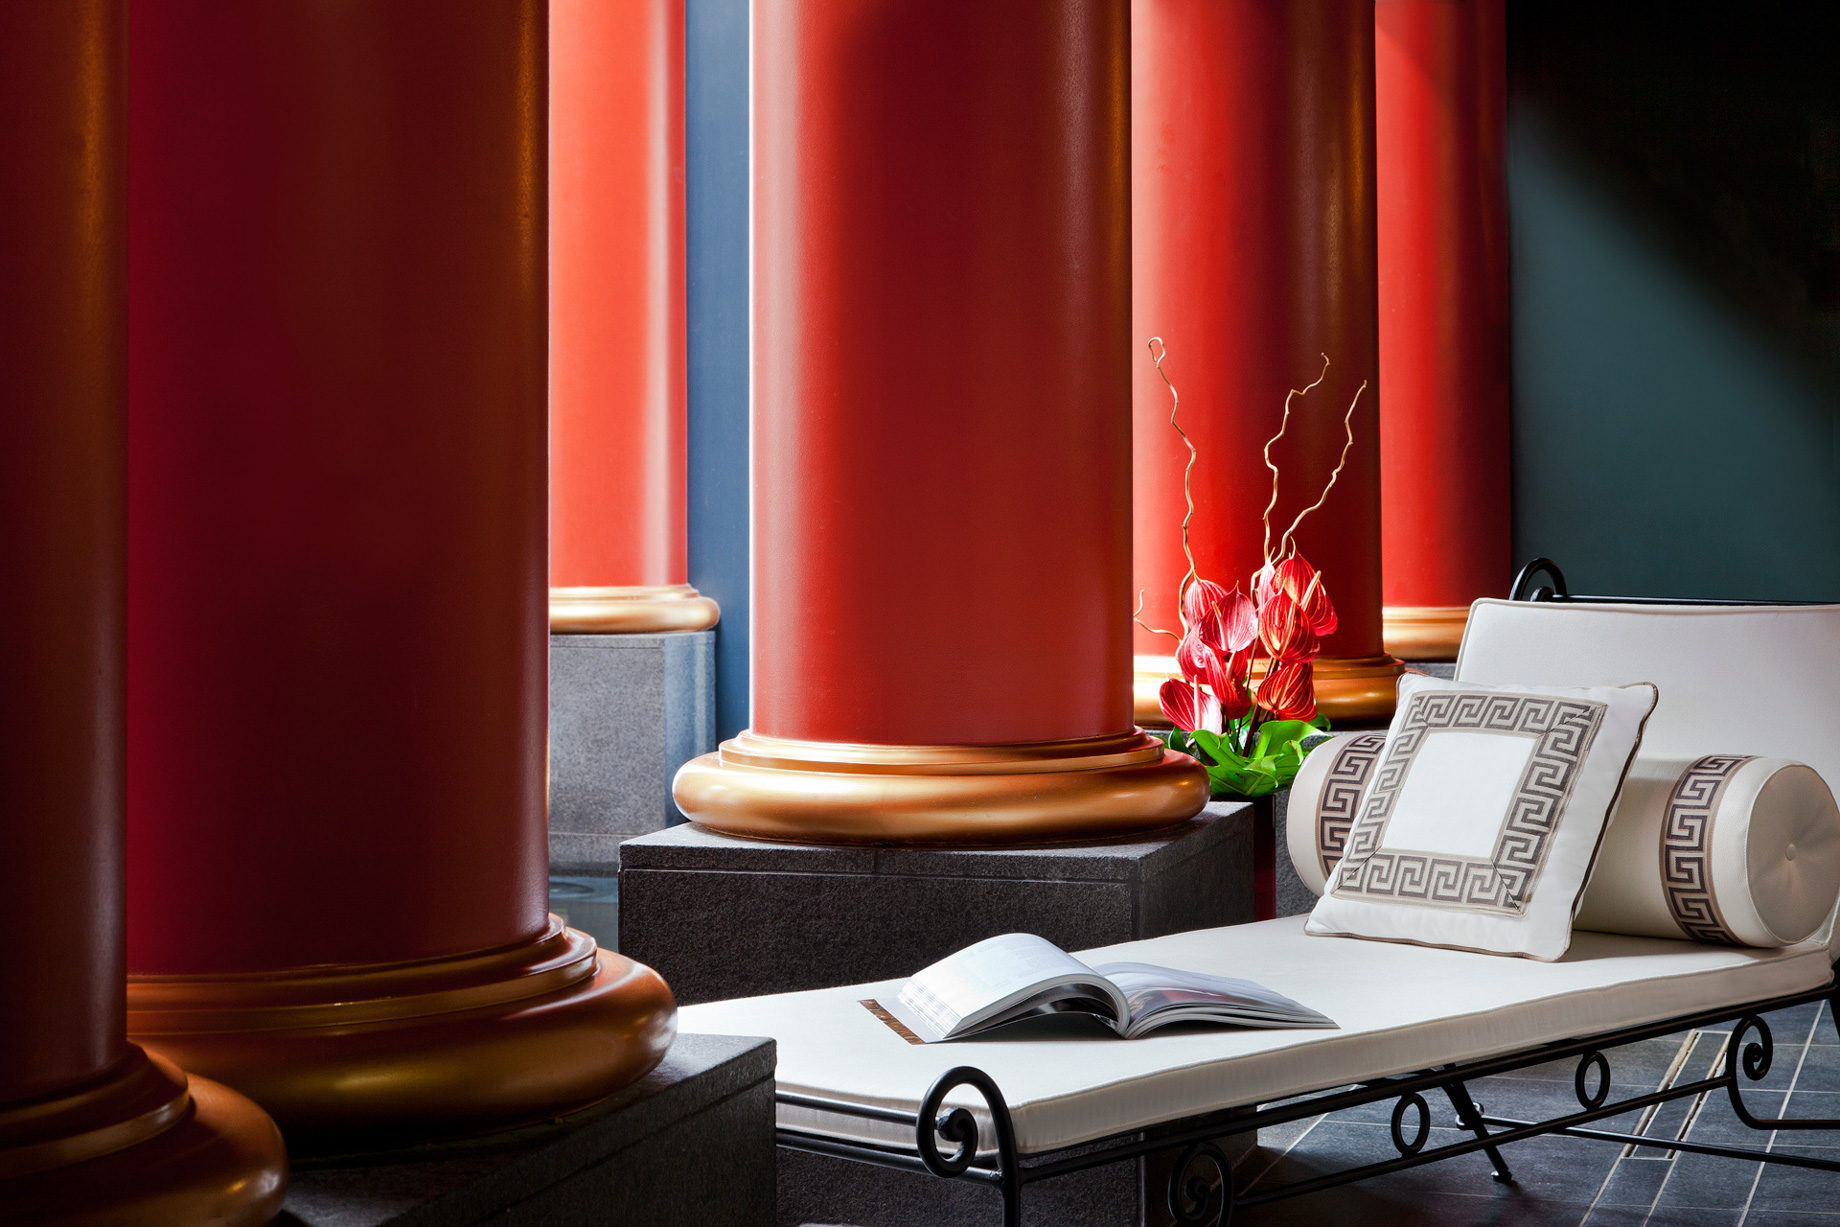 InterContinental Bordeaux Le Grand Hotel – Bordeaux, France – Spa Guerlain Relaxation